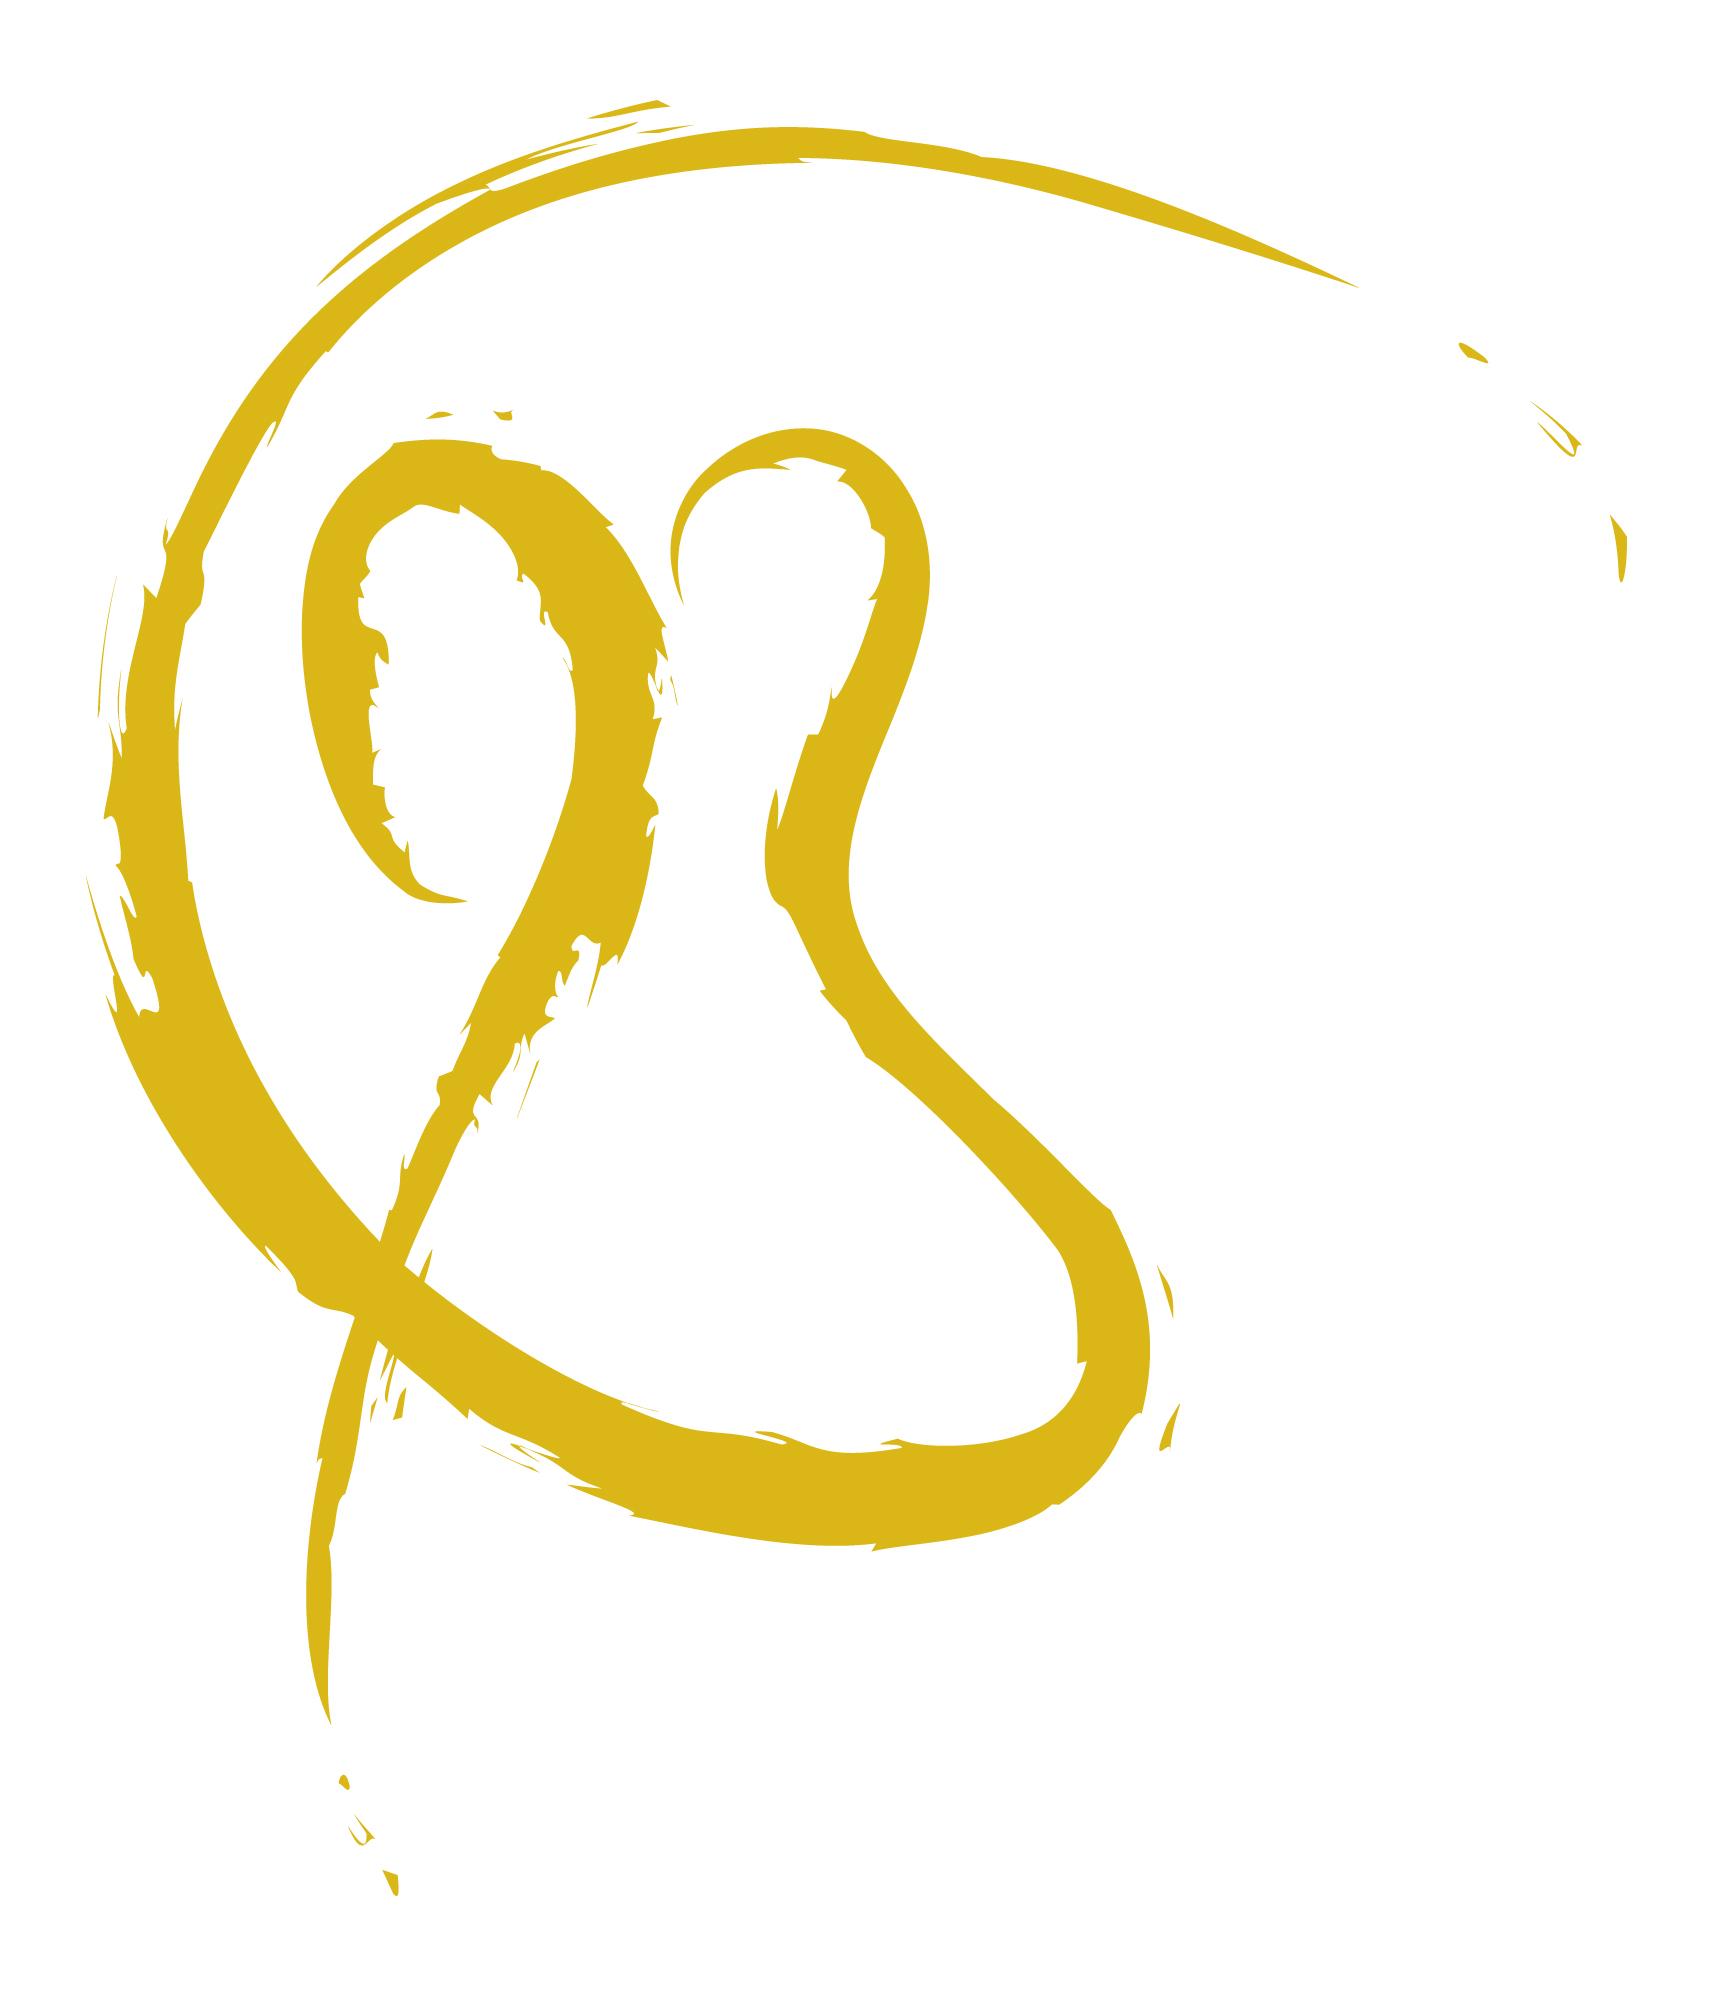 Ik Onkar - Sikh Religious Symbol Calligraphic Set